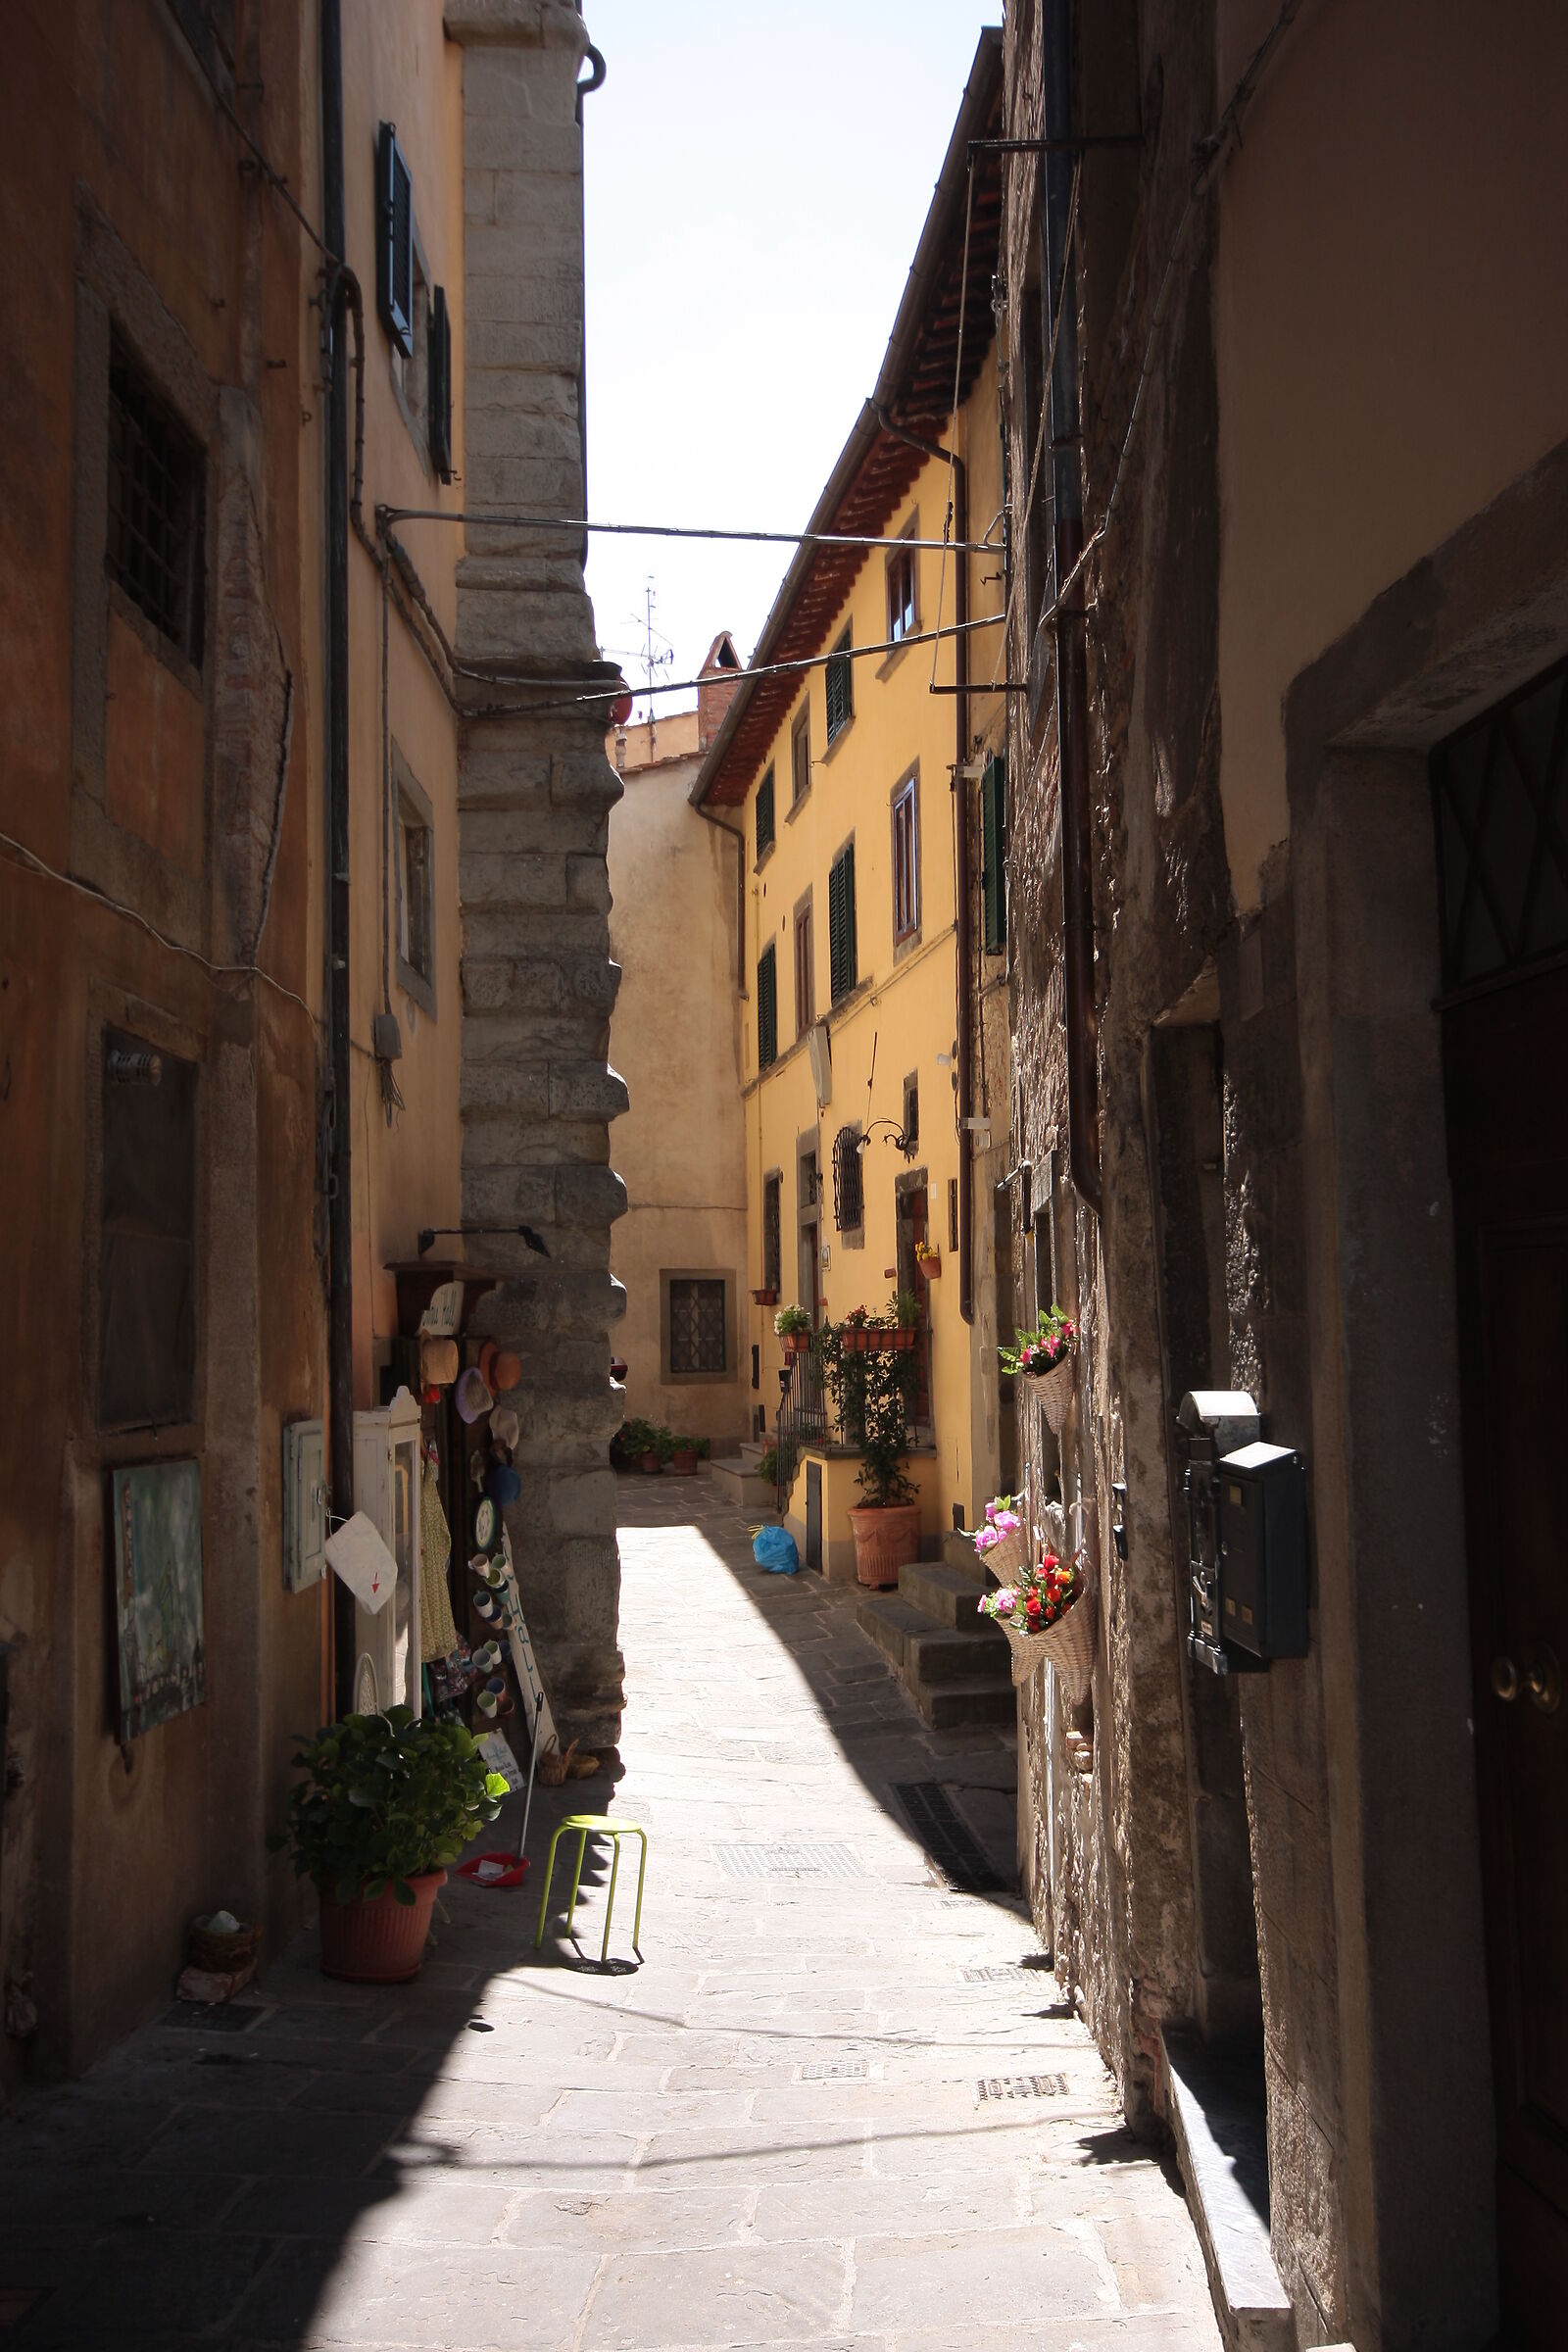 Up and down the narrow streets of Cortona ...